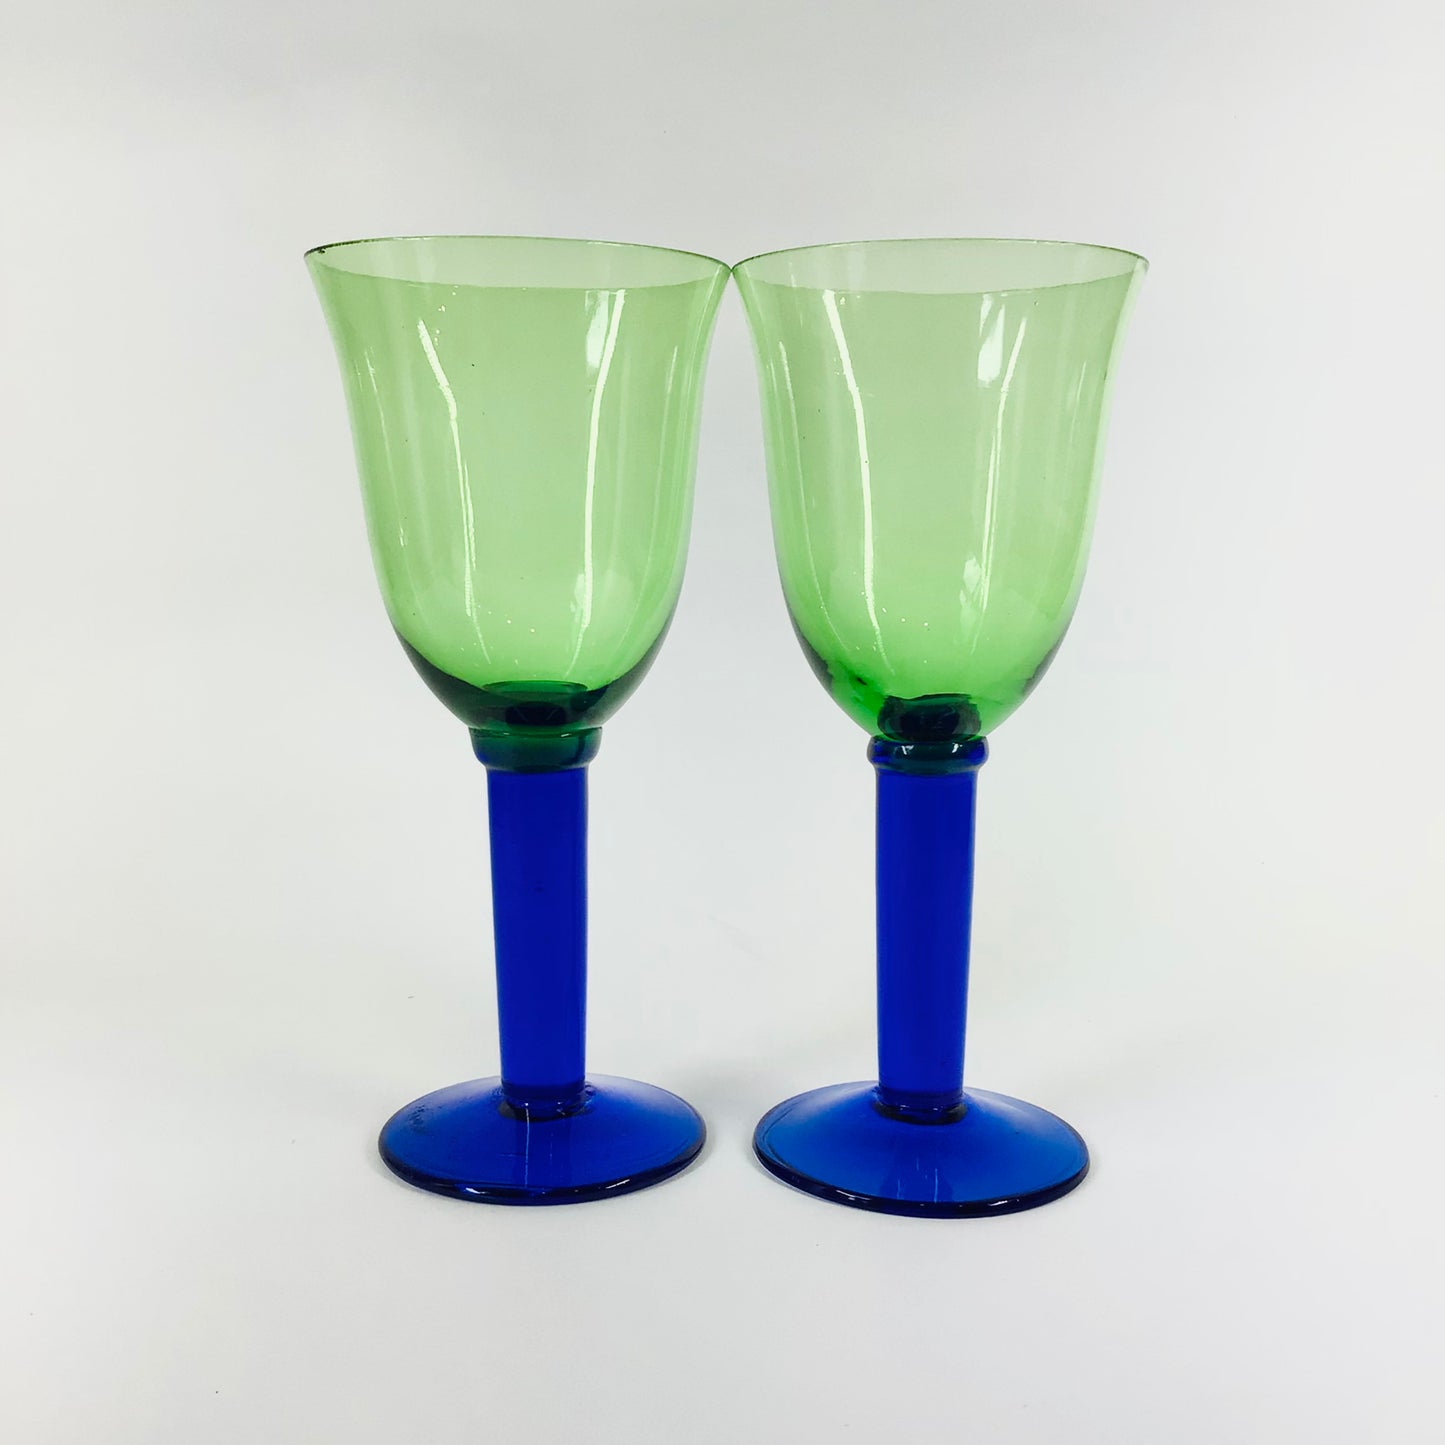 Midcentury green wine goblets with cobalt blue stem